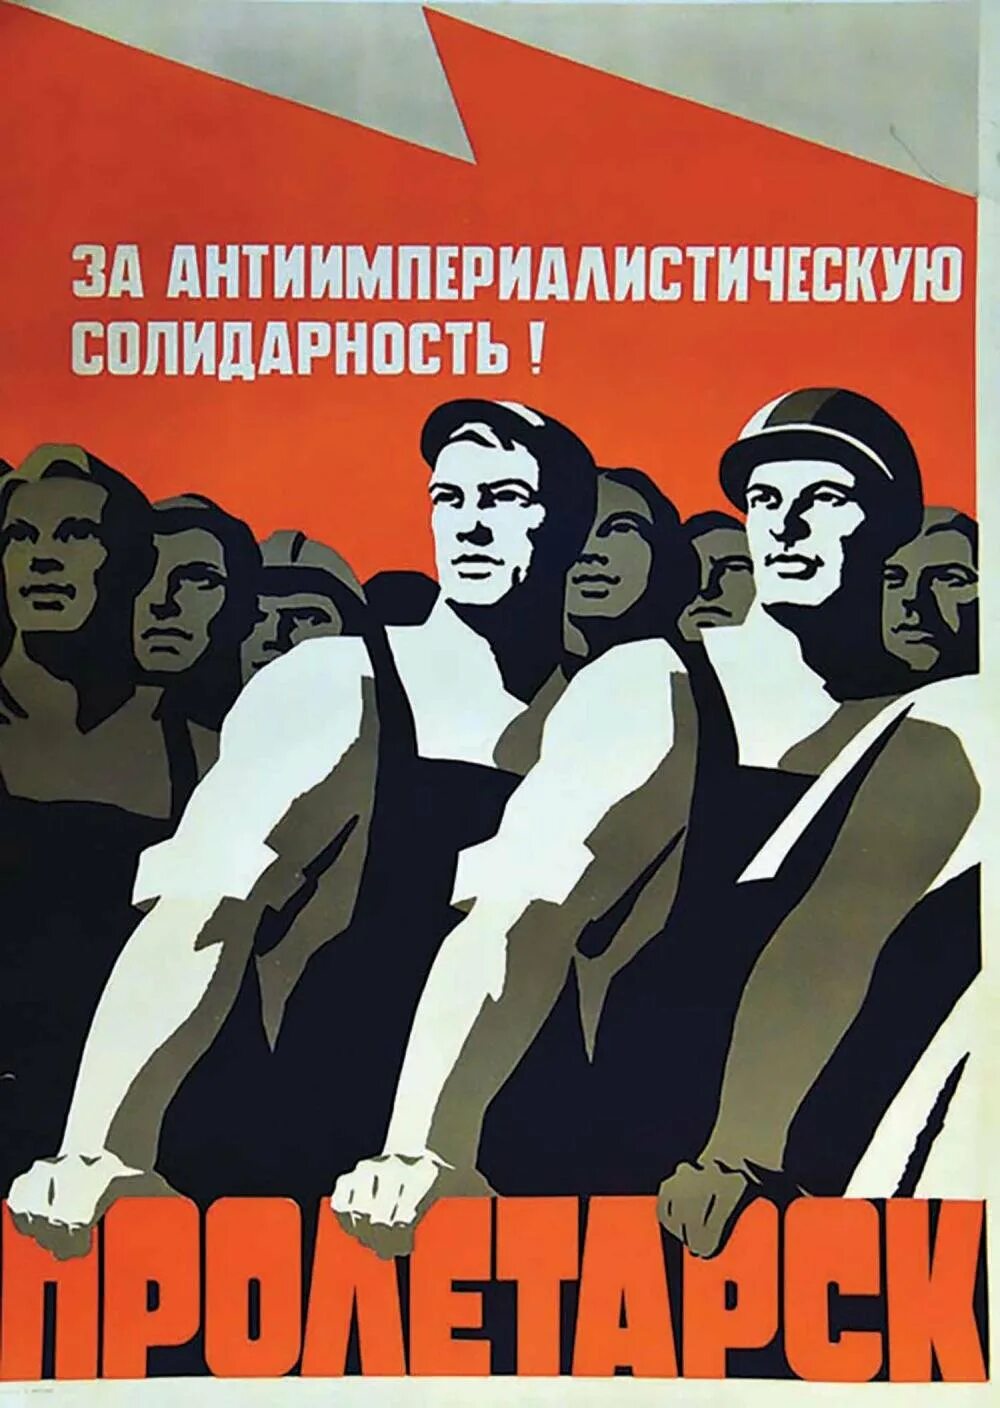 Солидарность плакат. Солидарность плакат СССР. Международная солидарность плакат. Справедливость плакат.